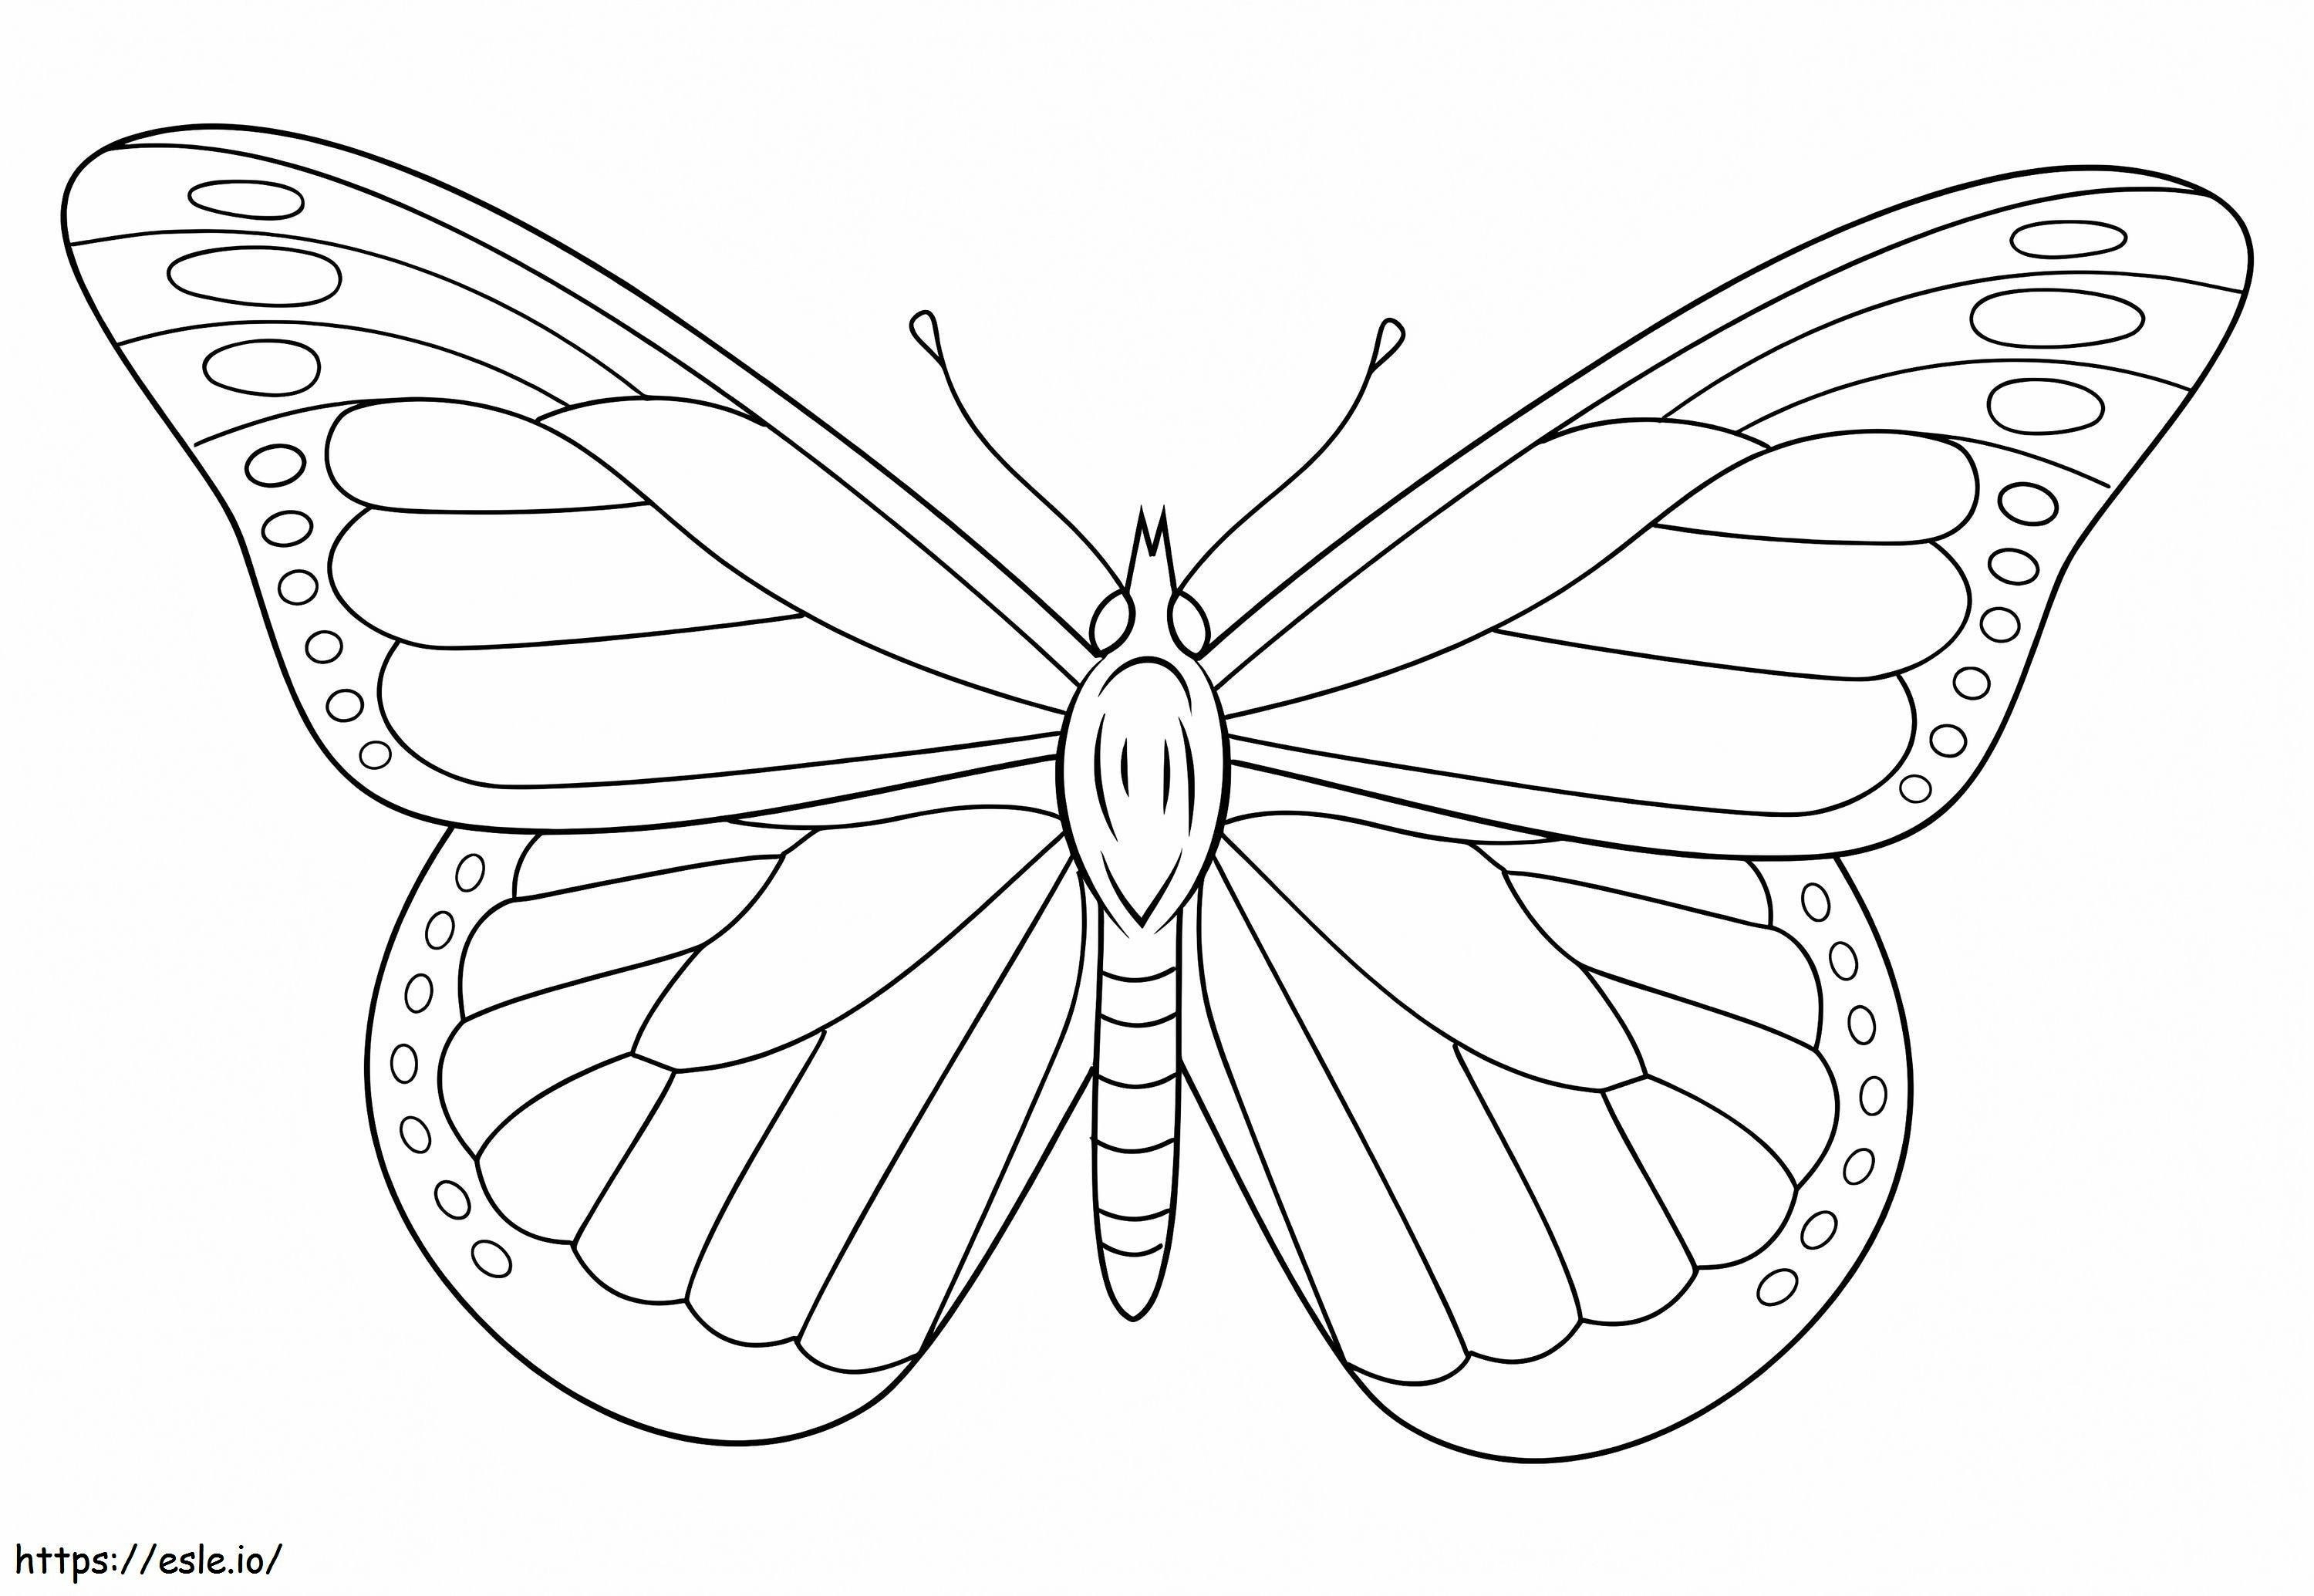 Motyl monarcha 1 kolorowanka